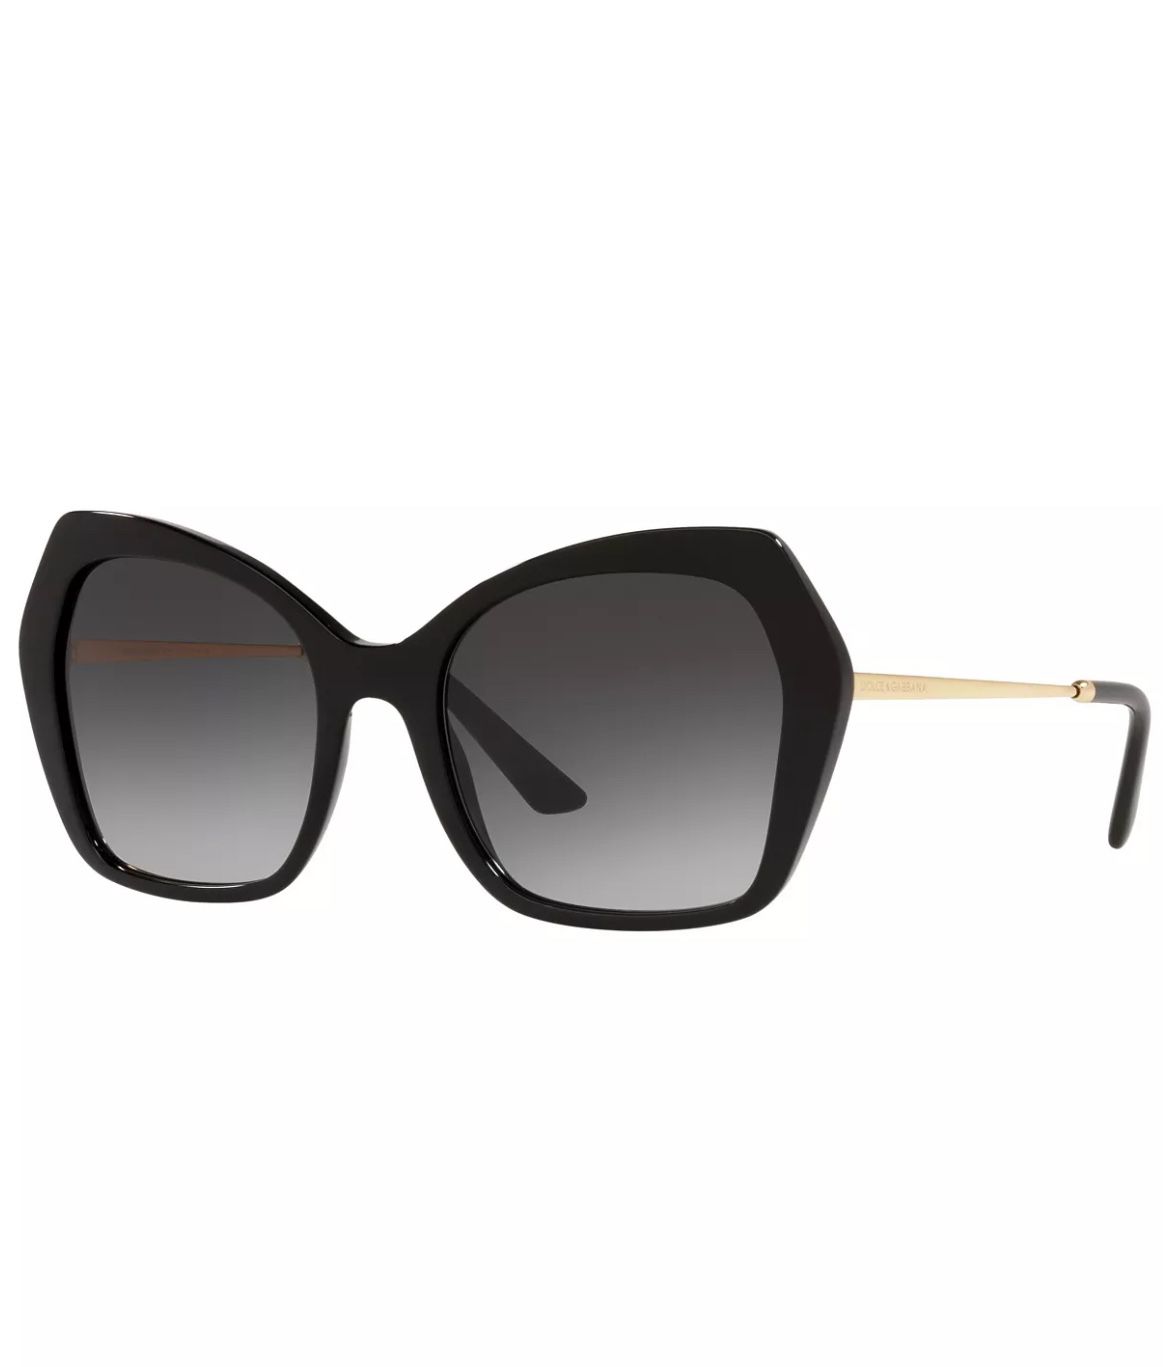 Dolce & Gabbana Women’s Sunglasses 